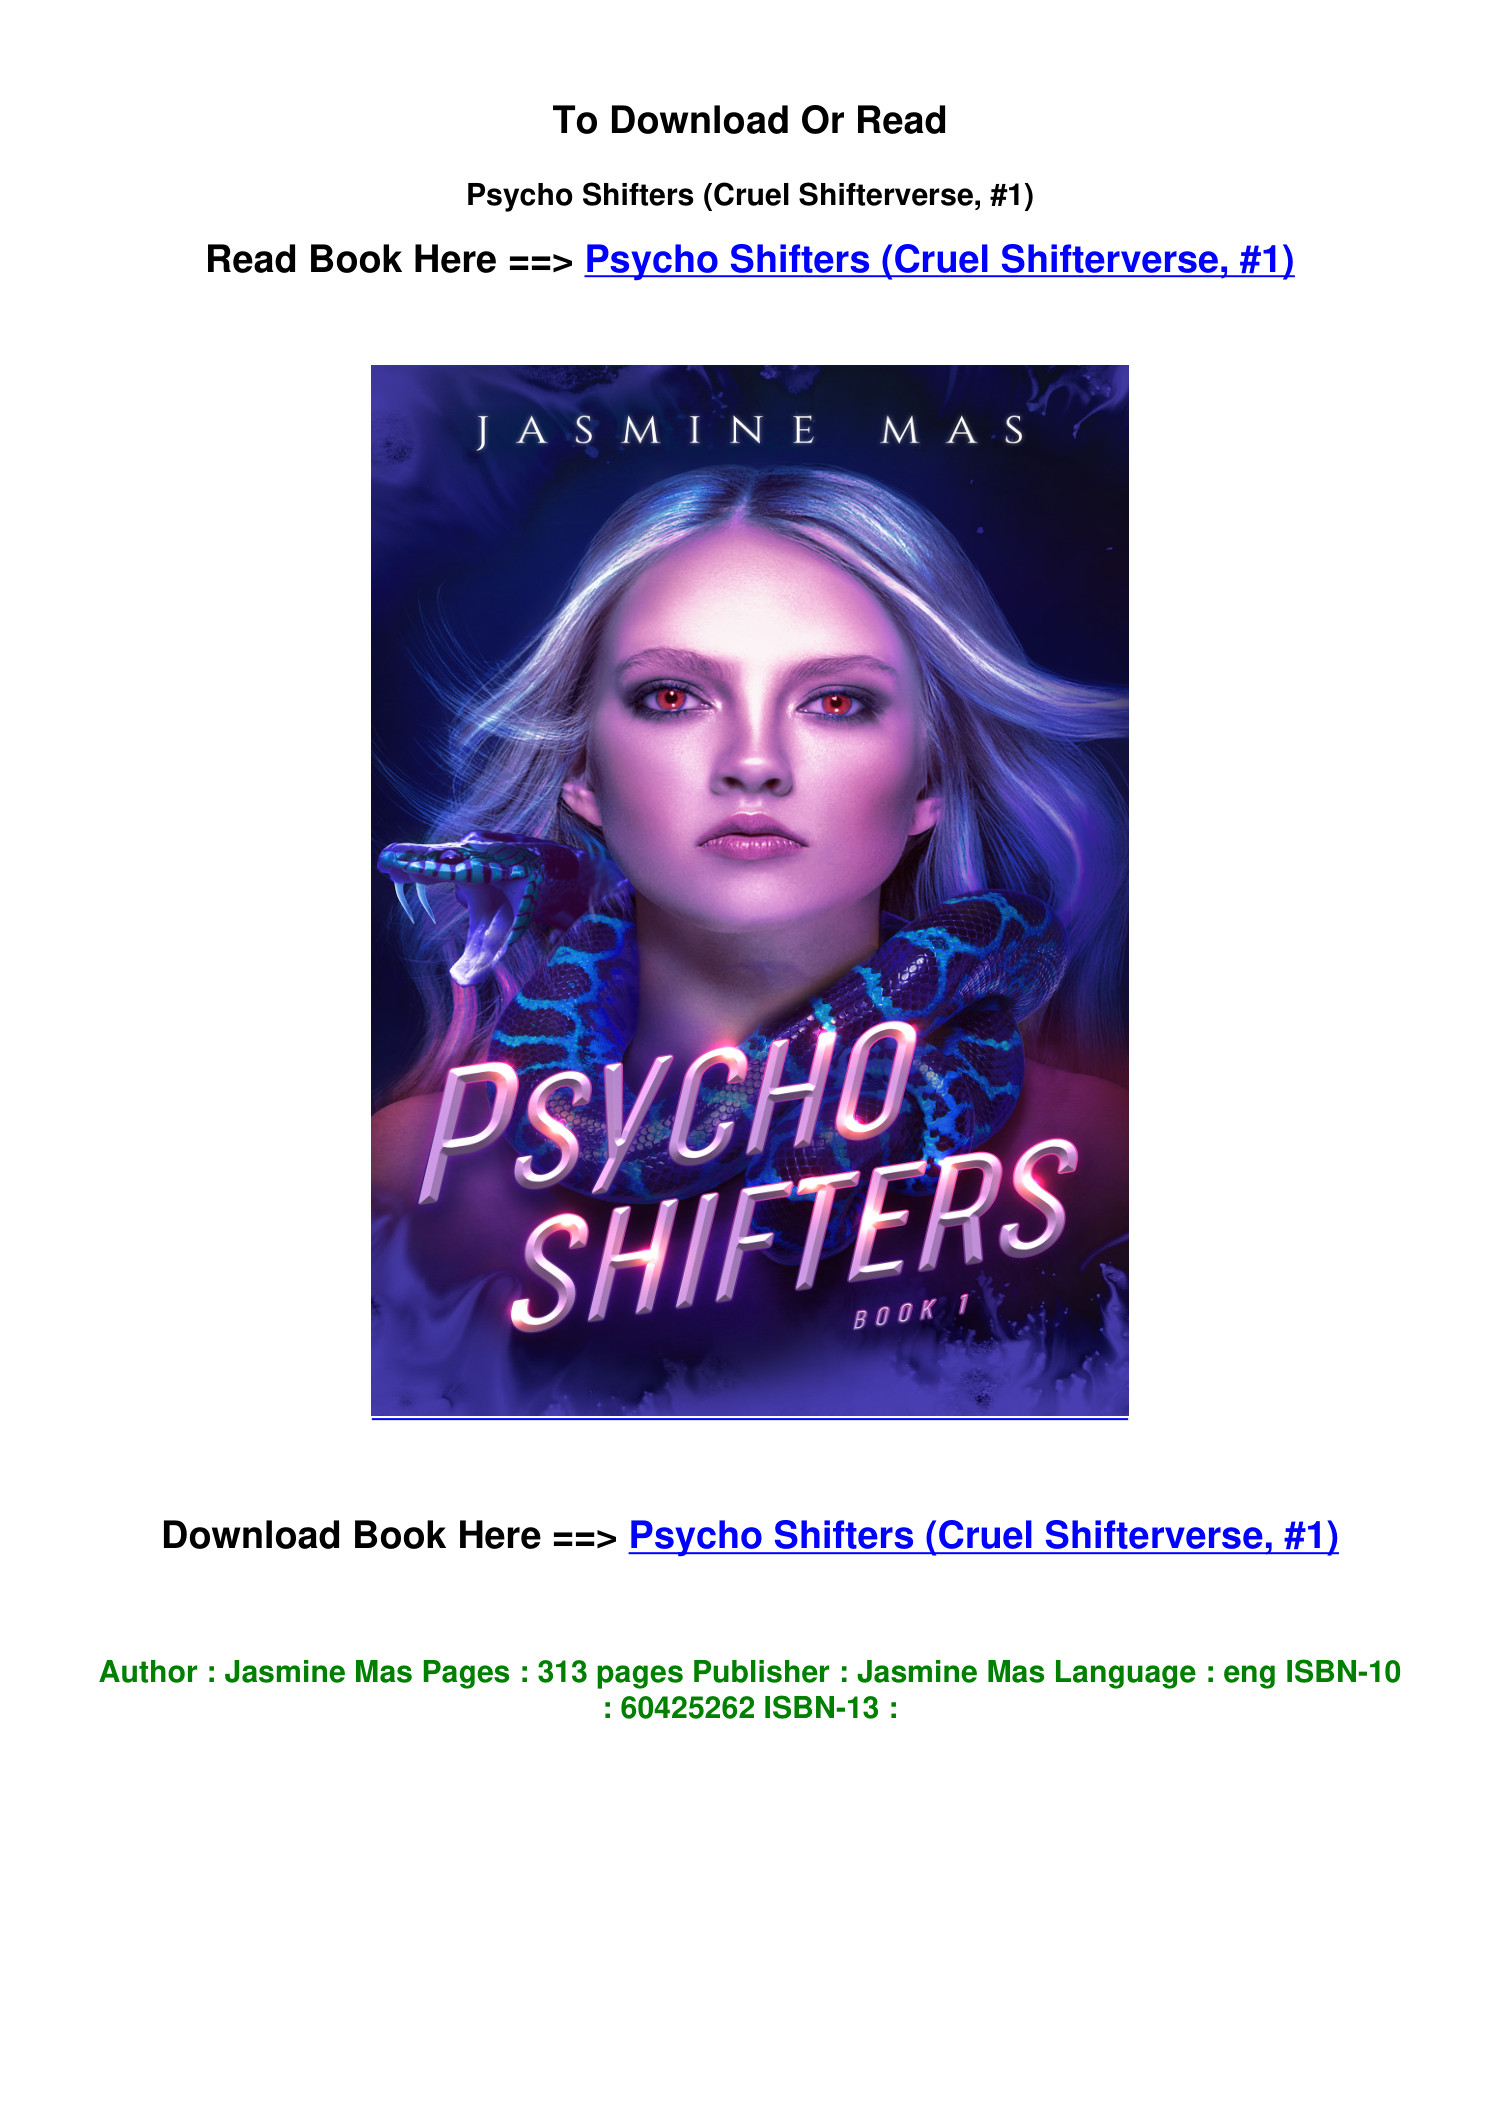 DOWNLOAD PDF Psycho Shifters Cruel Shifterverse 1 By Jasmine Mas.pdf